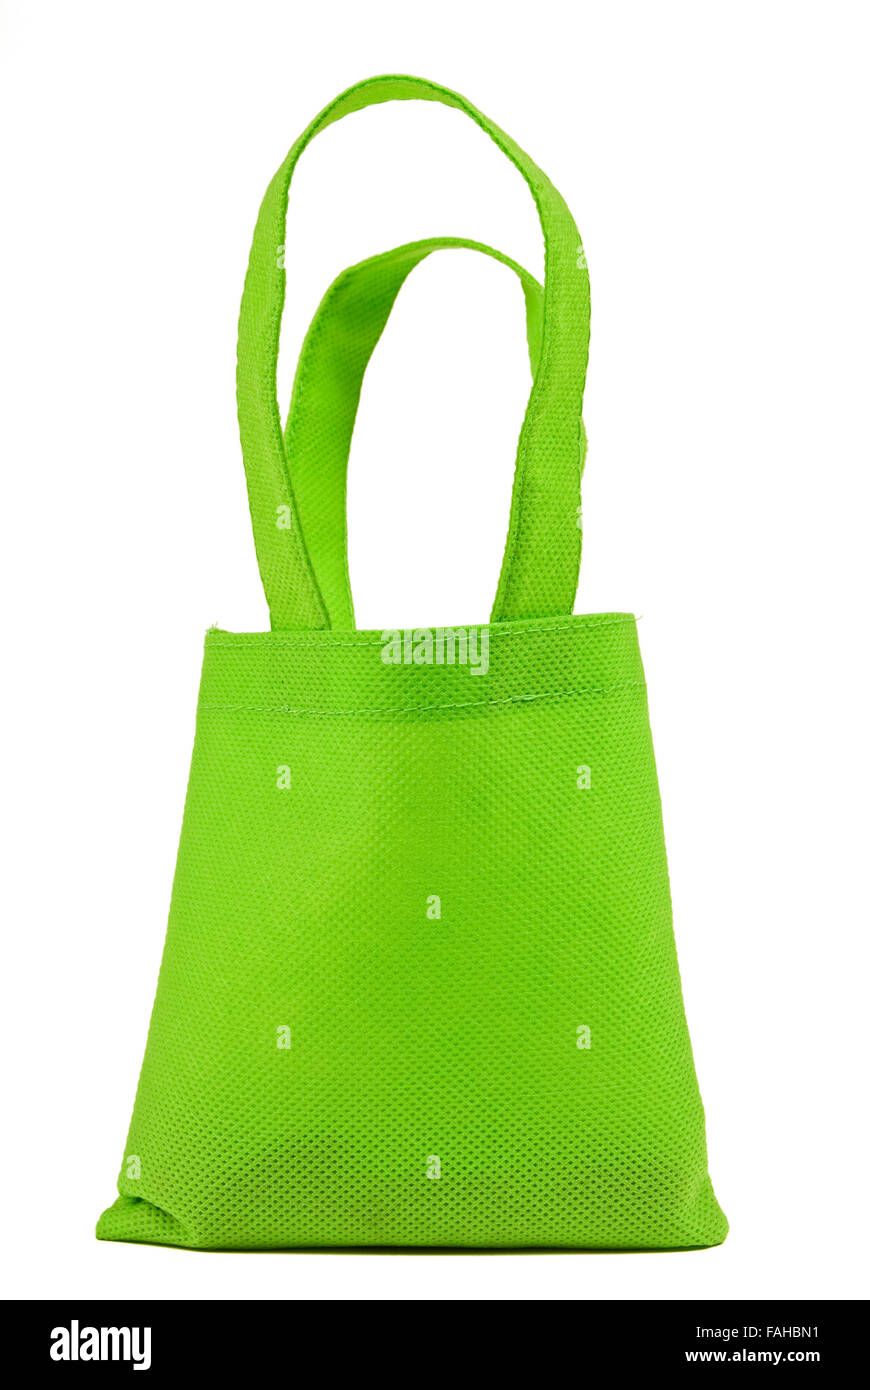 Bolsa de compras de tela de neón verde Fotografía de stock - Alamy